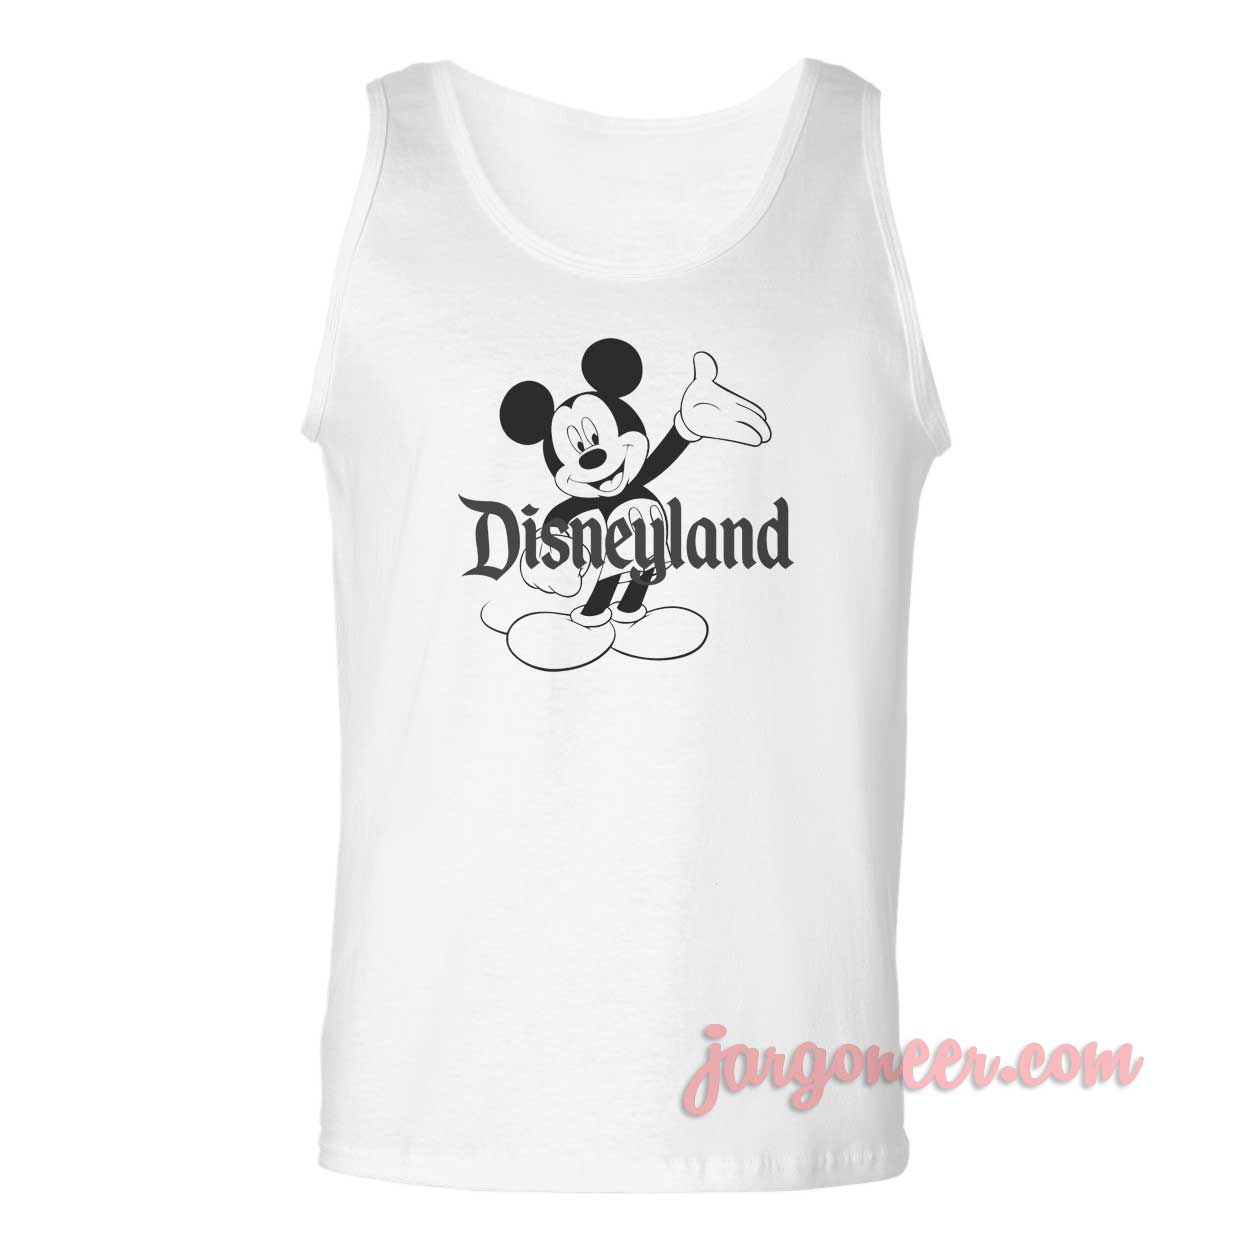 Mickey Disney - Shop Unique Graphic Cool Shirt Designs